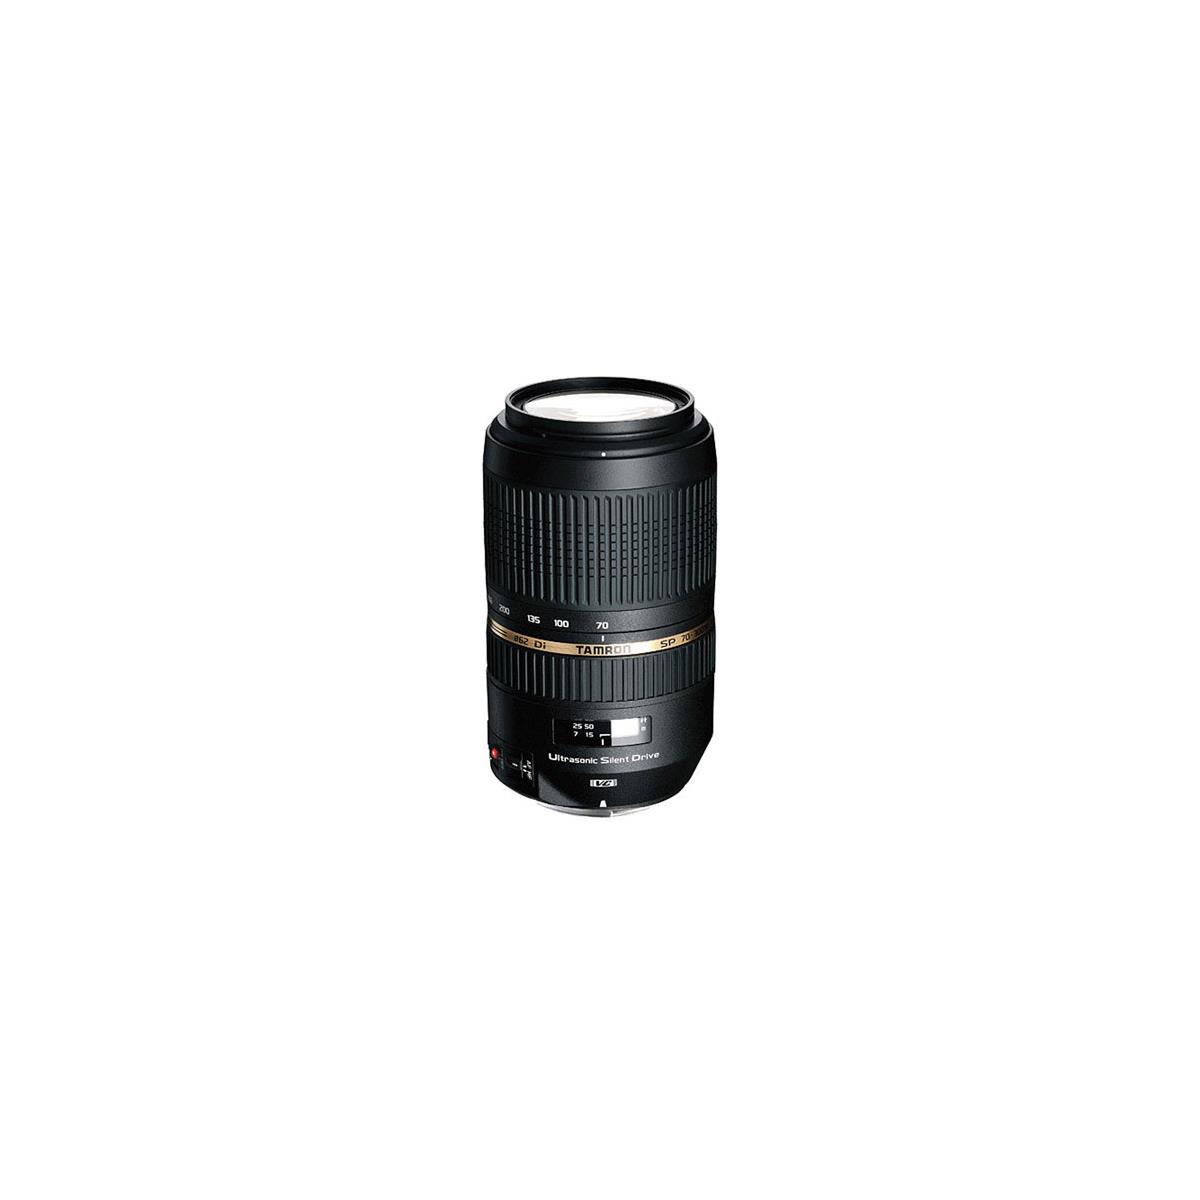 Tamron 70-300mm f/4-5.6 Di LD Macro Telephoto Lens for Sony A Mount -  AFA005S-700